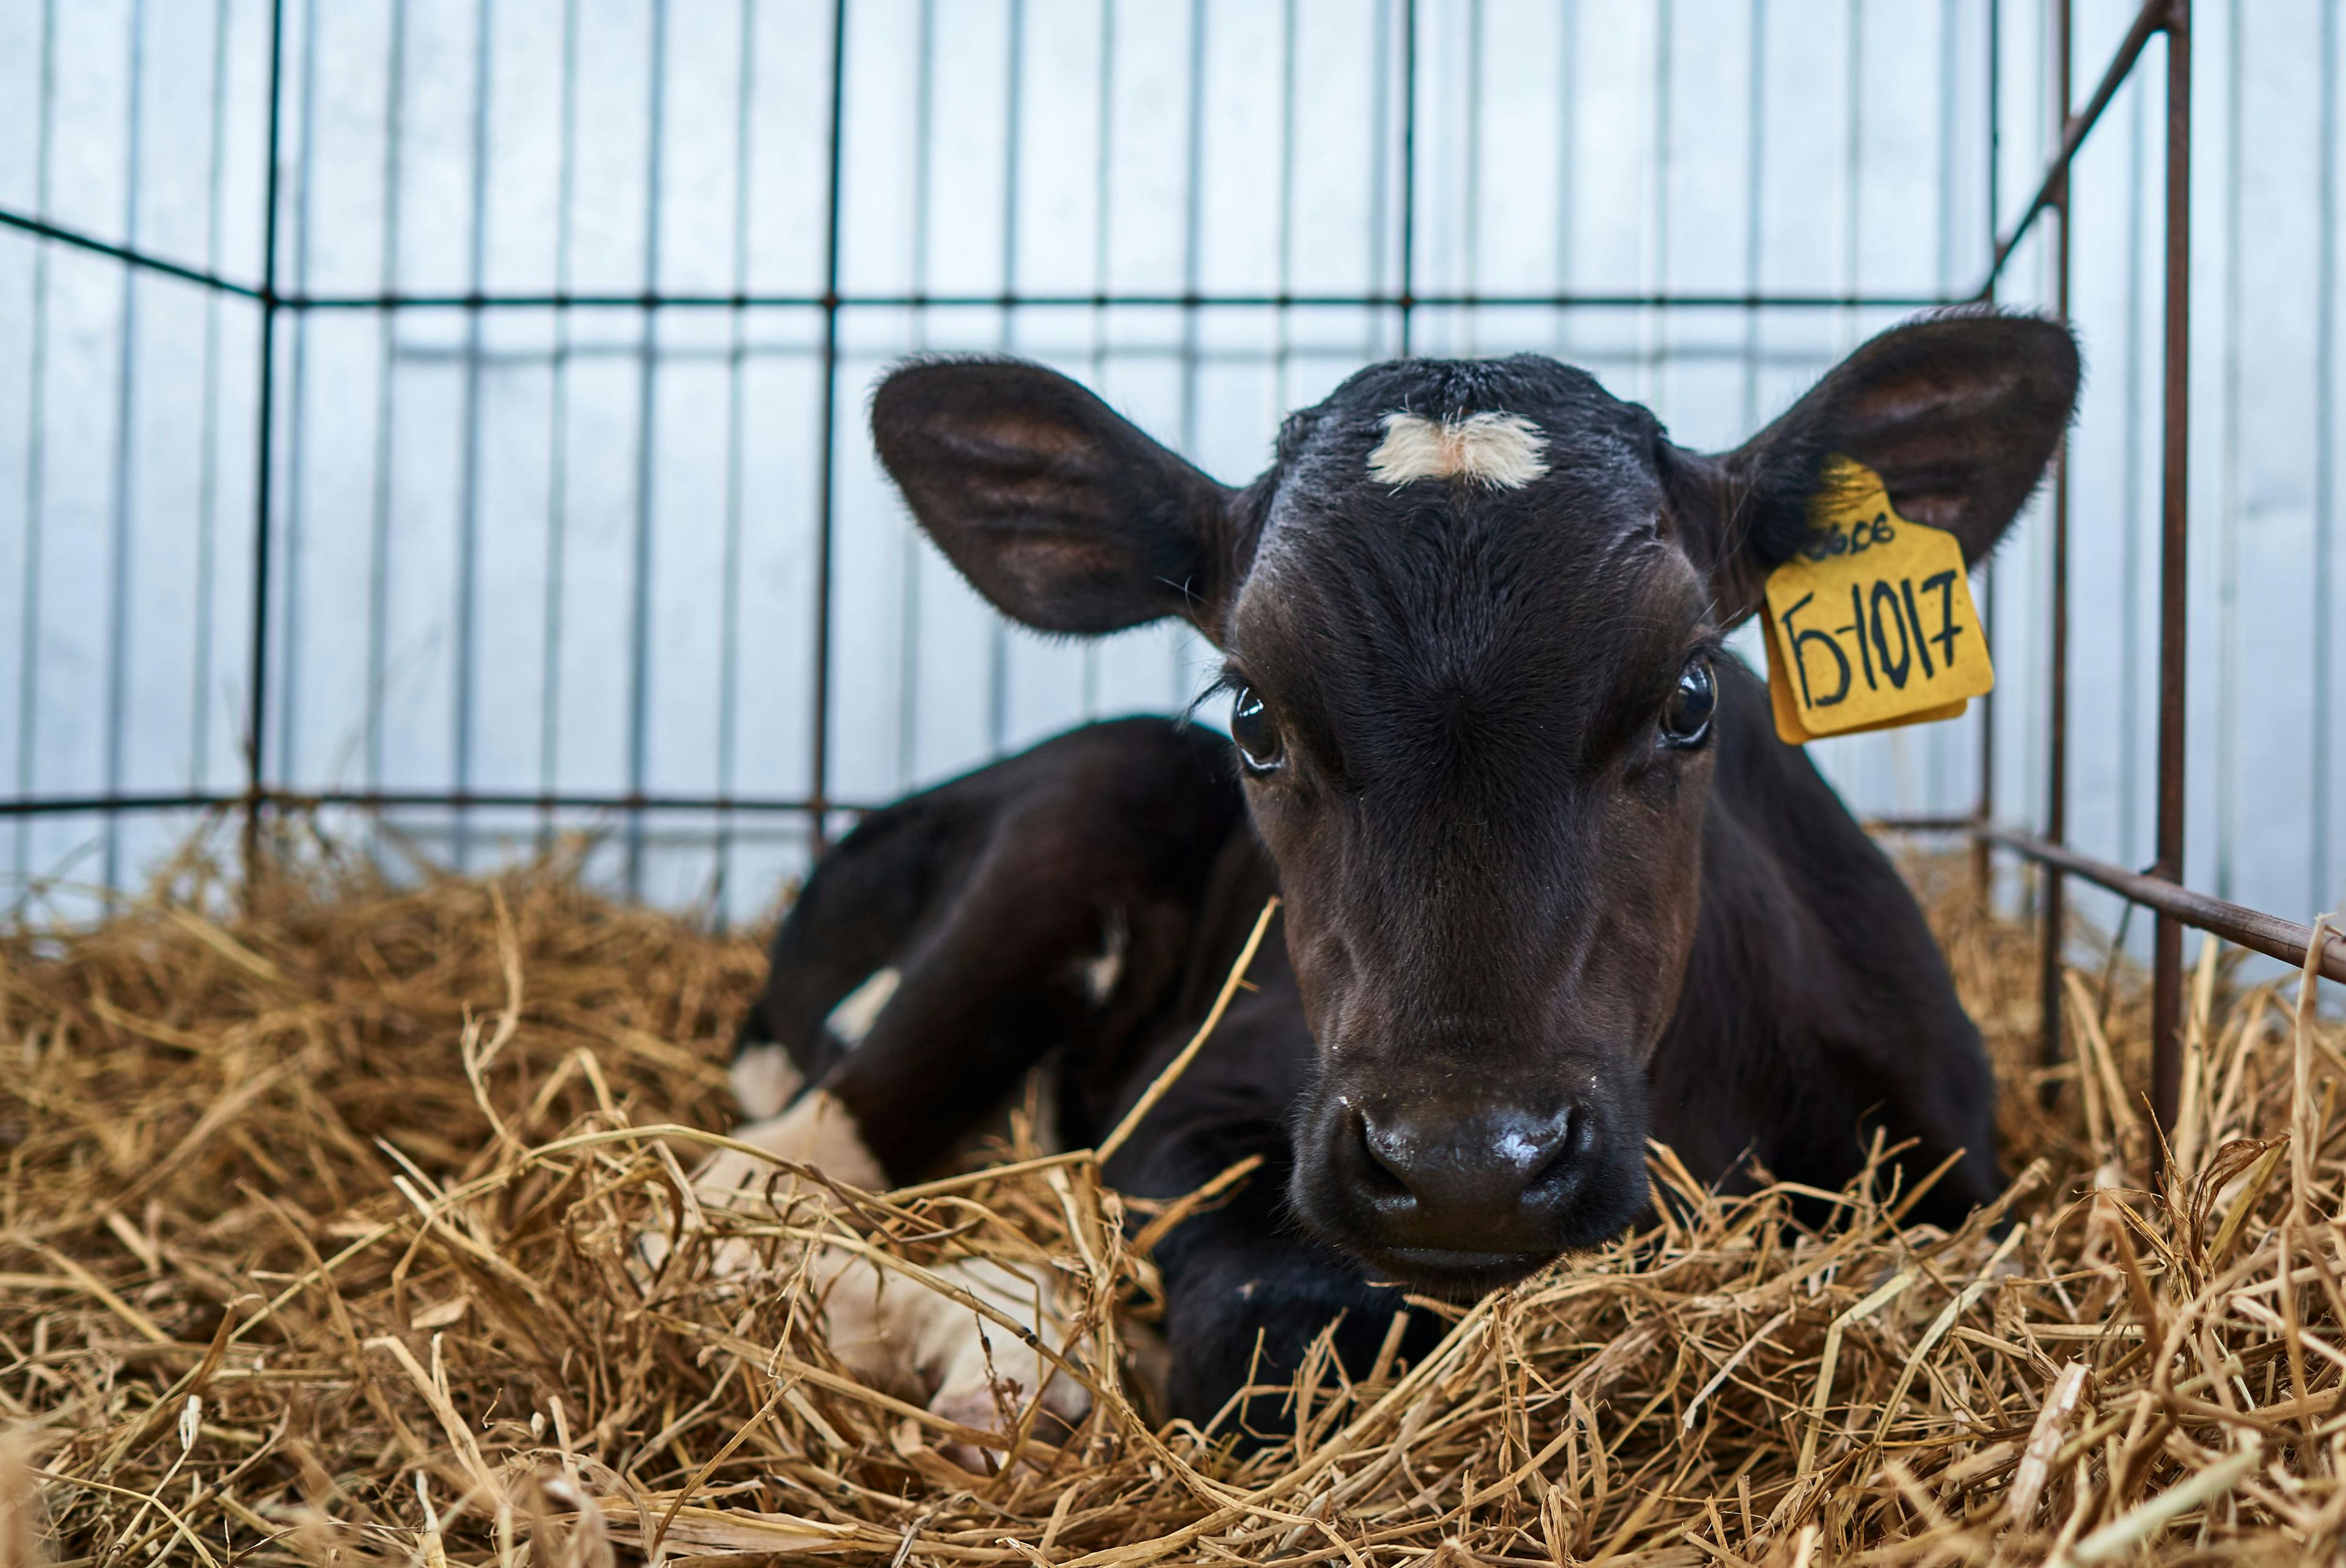 Calf on a livestock farm